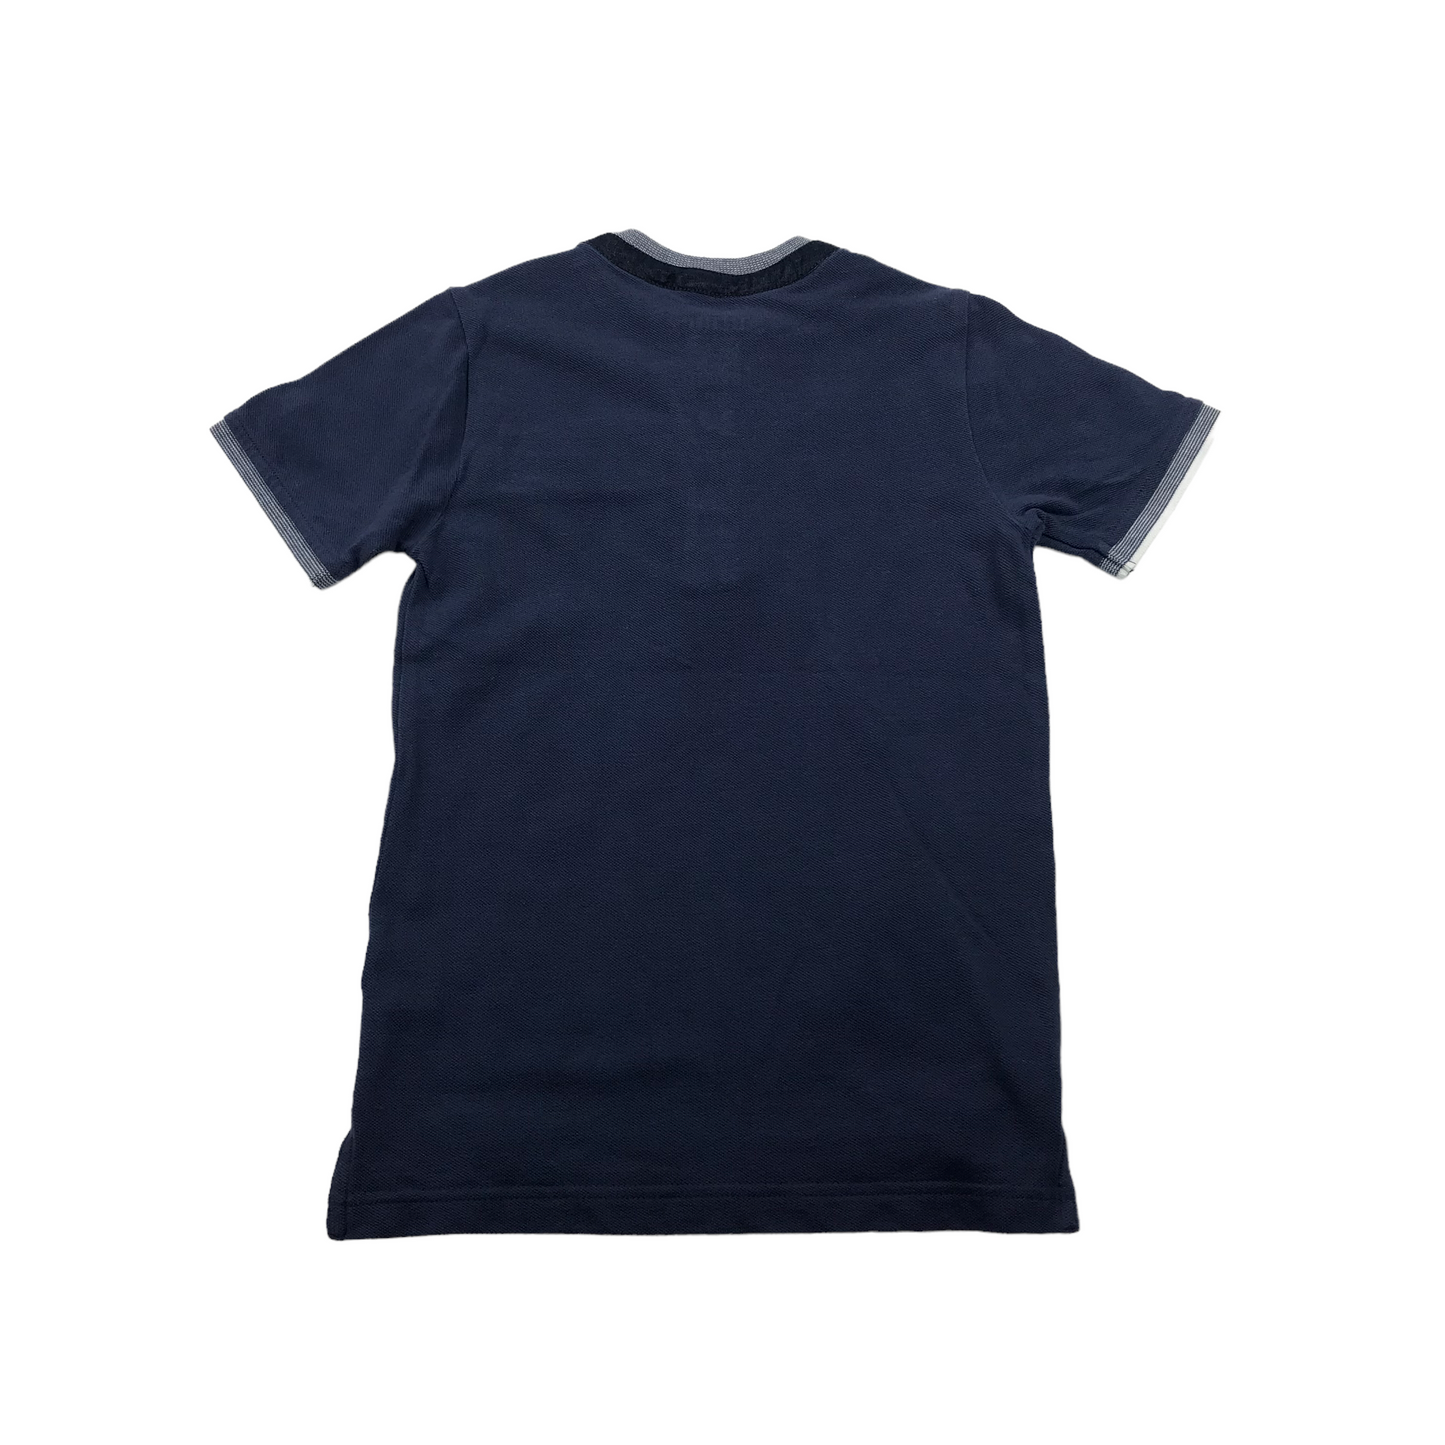 Nutmeg Navy and White Cotton Polo-style T-shirt Set Age 5